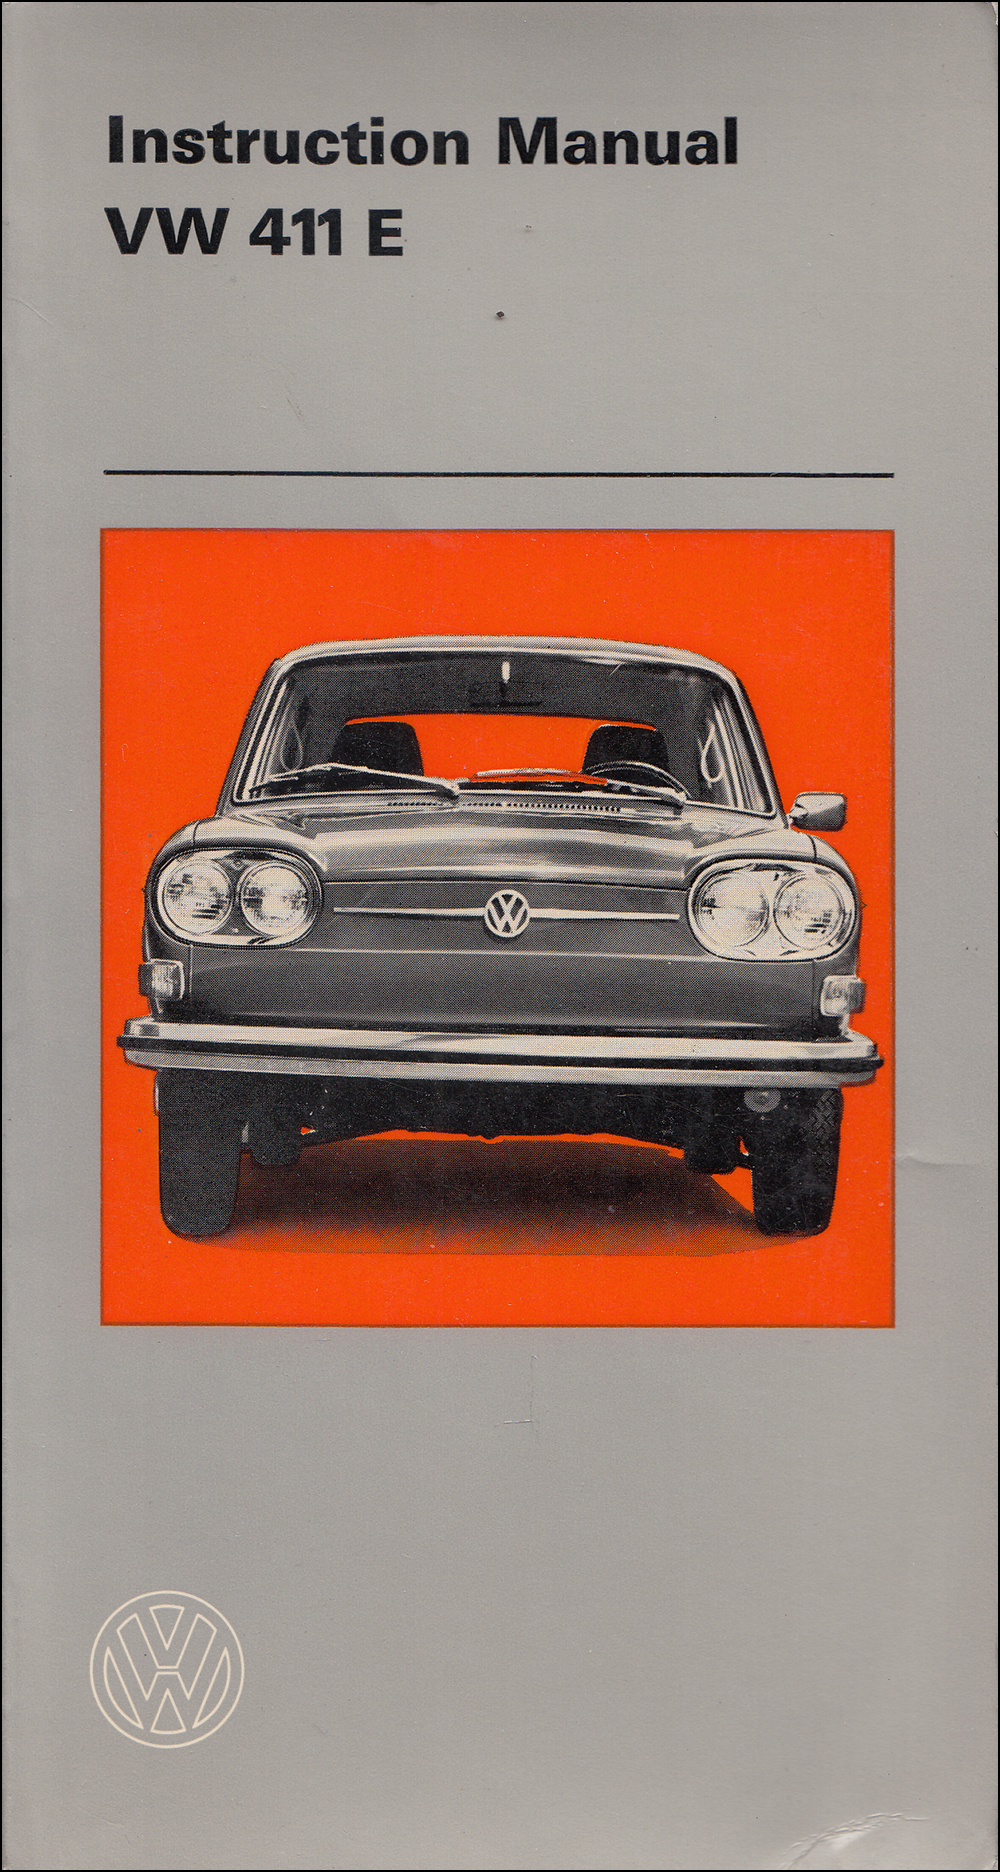 1970 Volkswagen Type 4 Owner's Manual 411 E Original